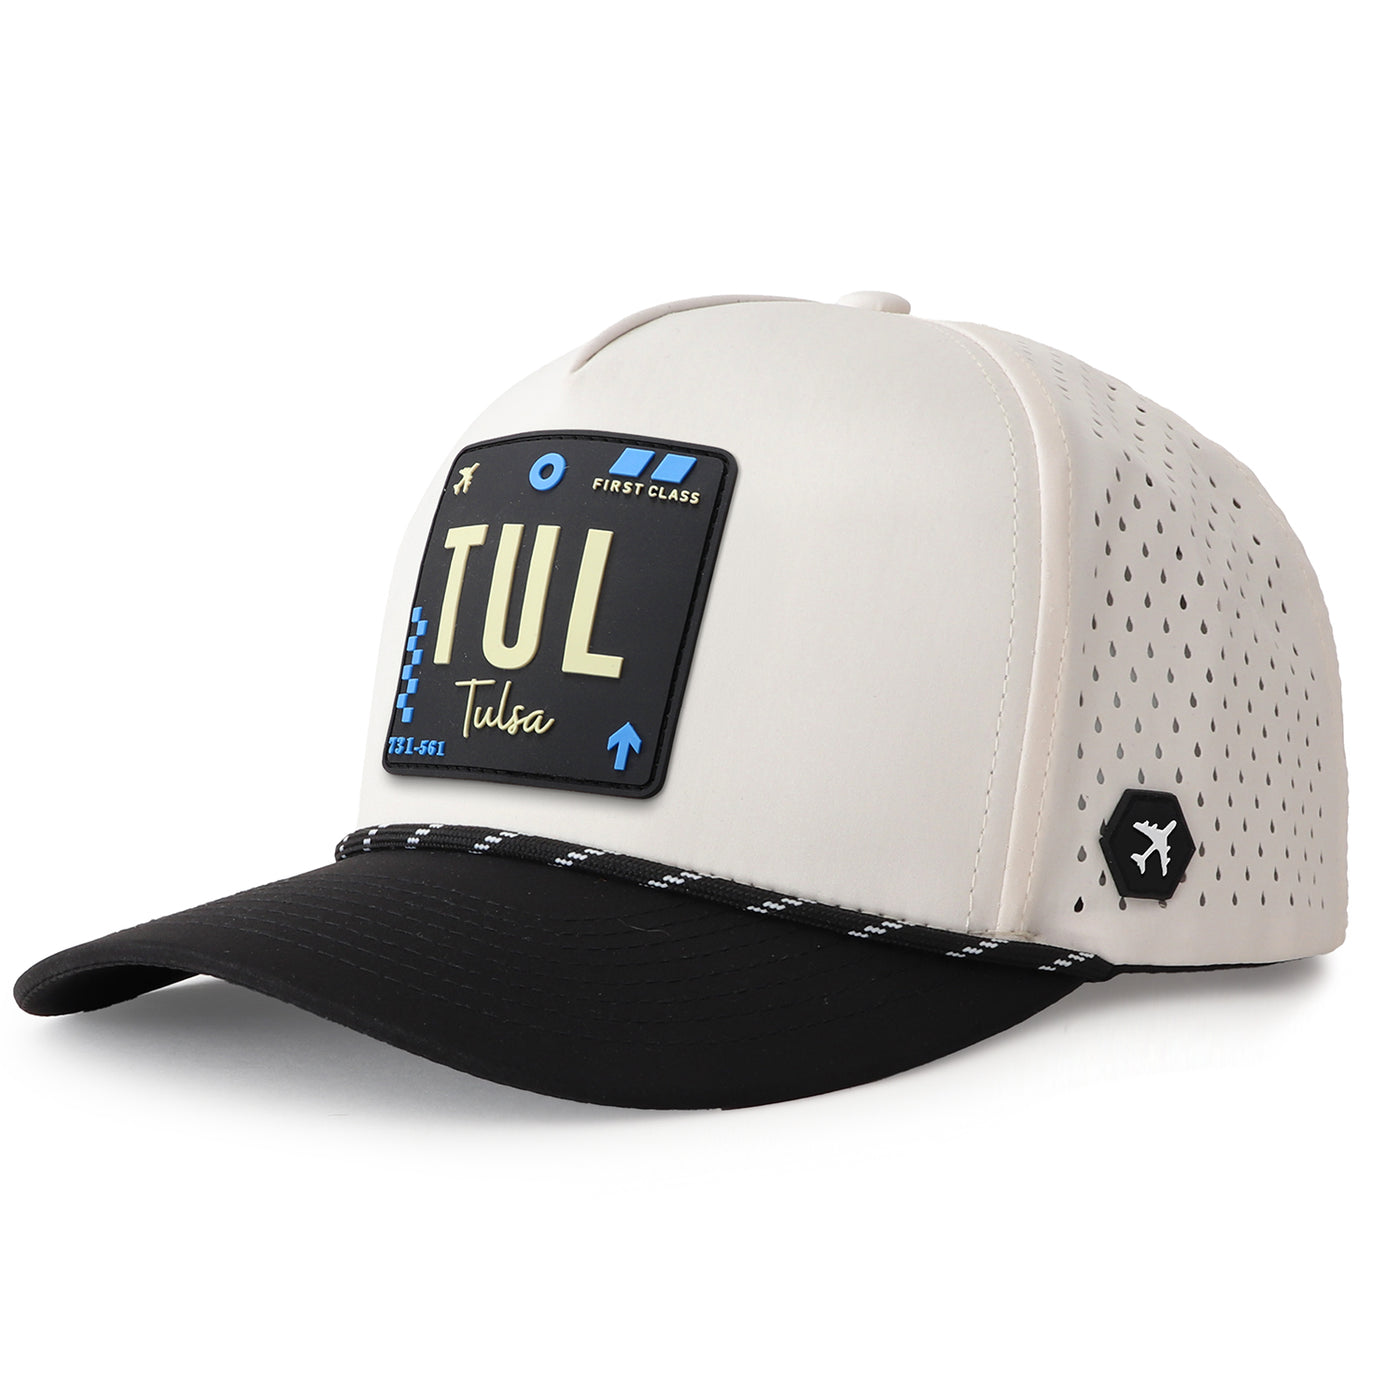 Tulsa Revolve Performance Hat